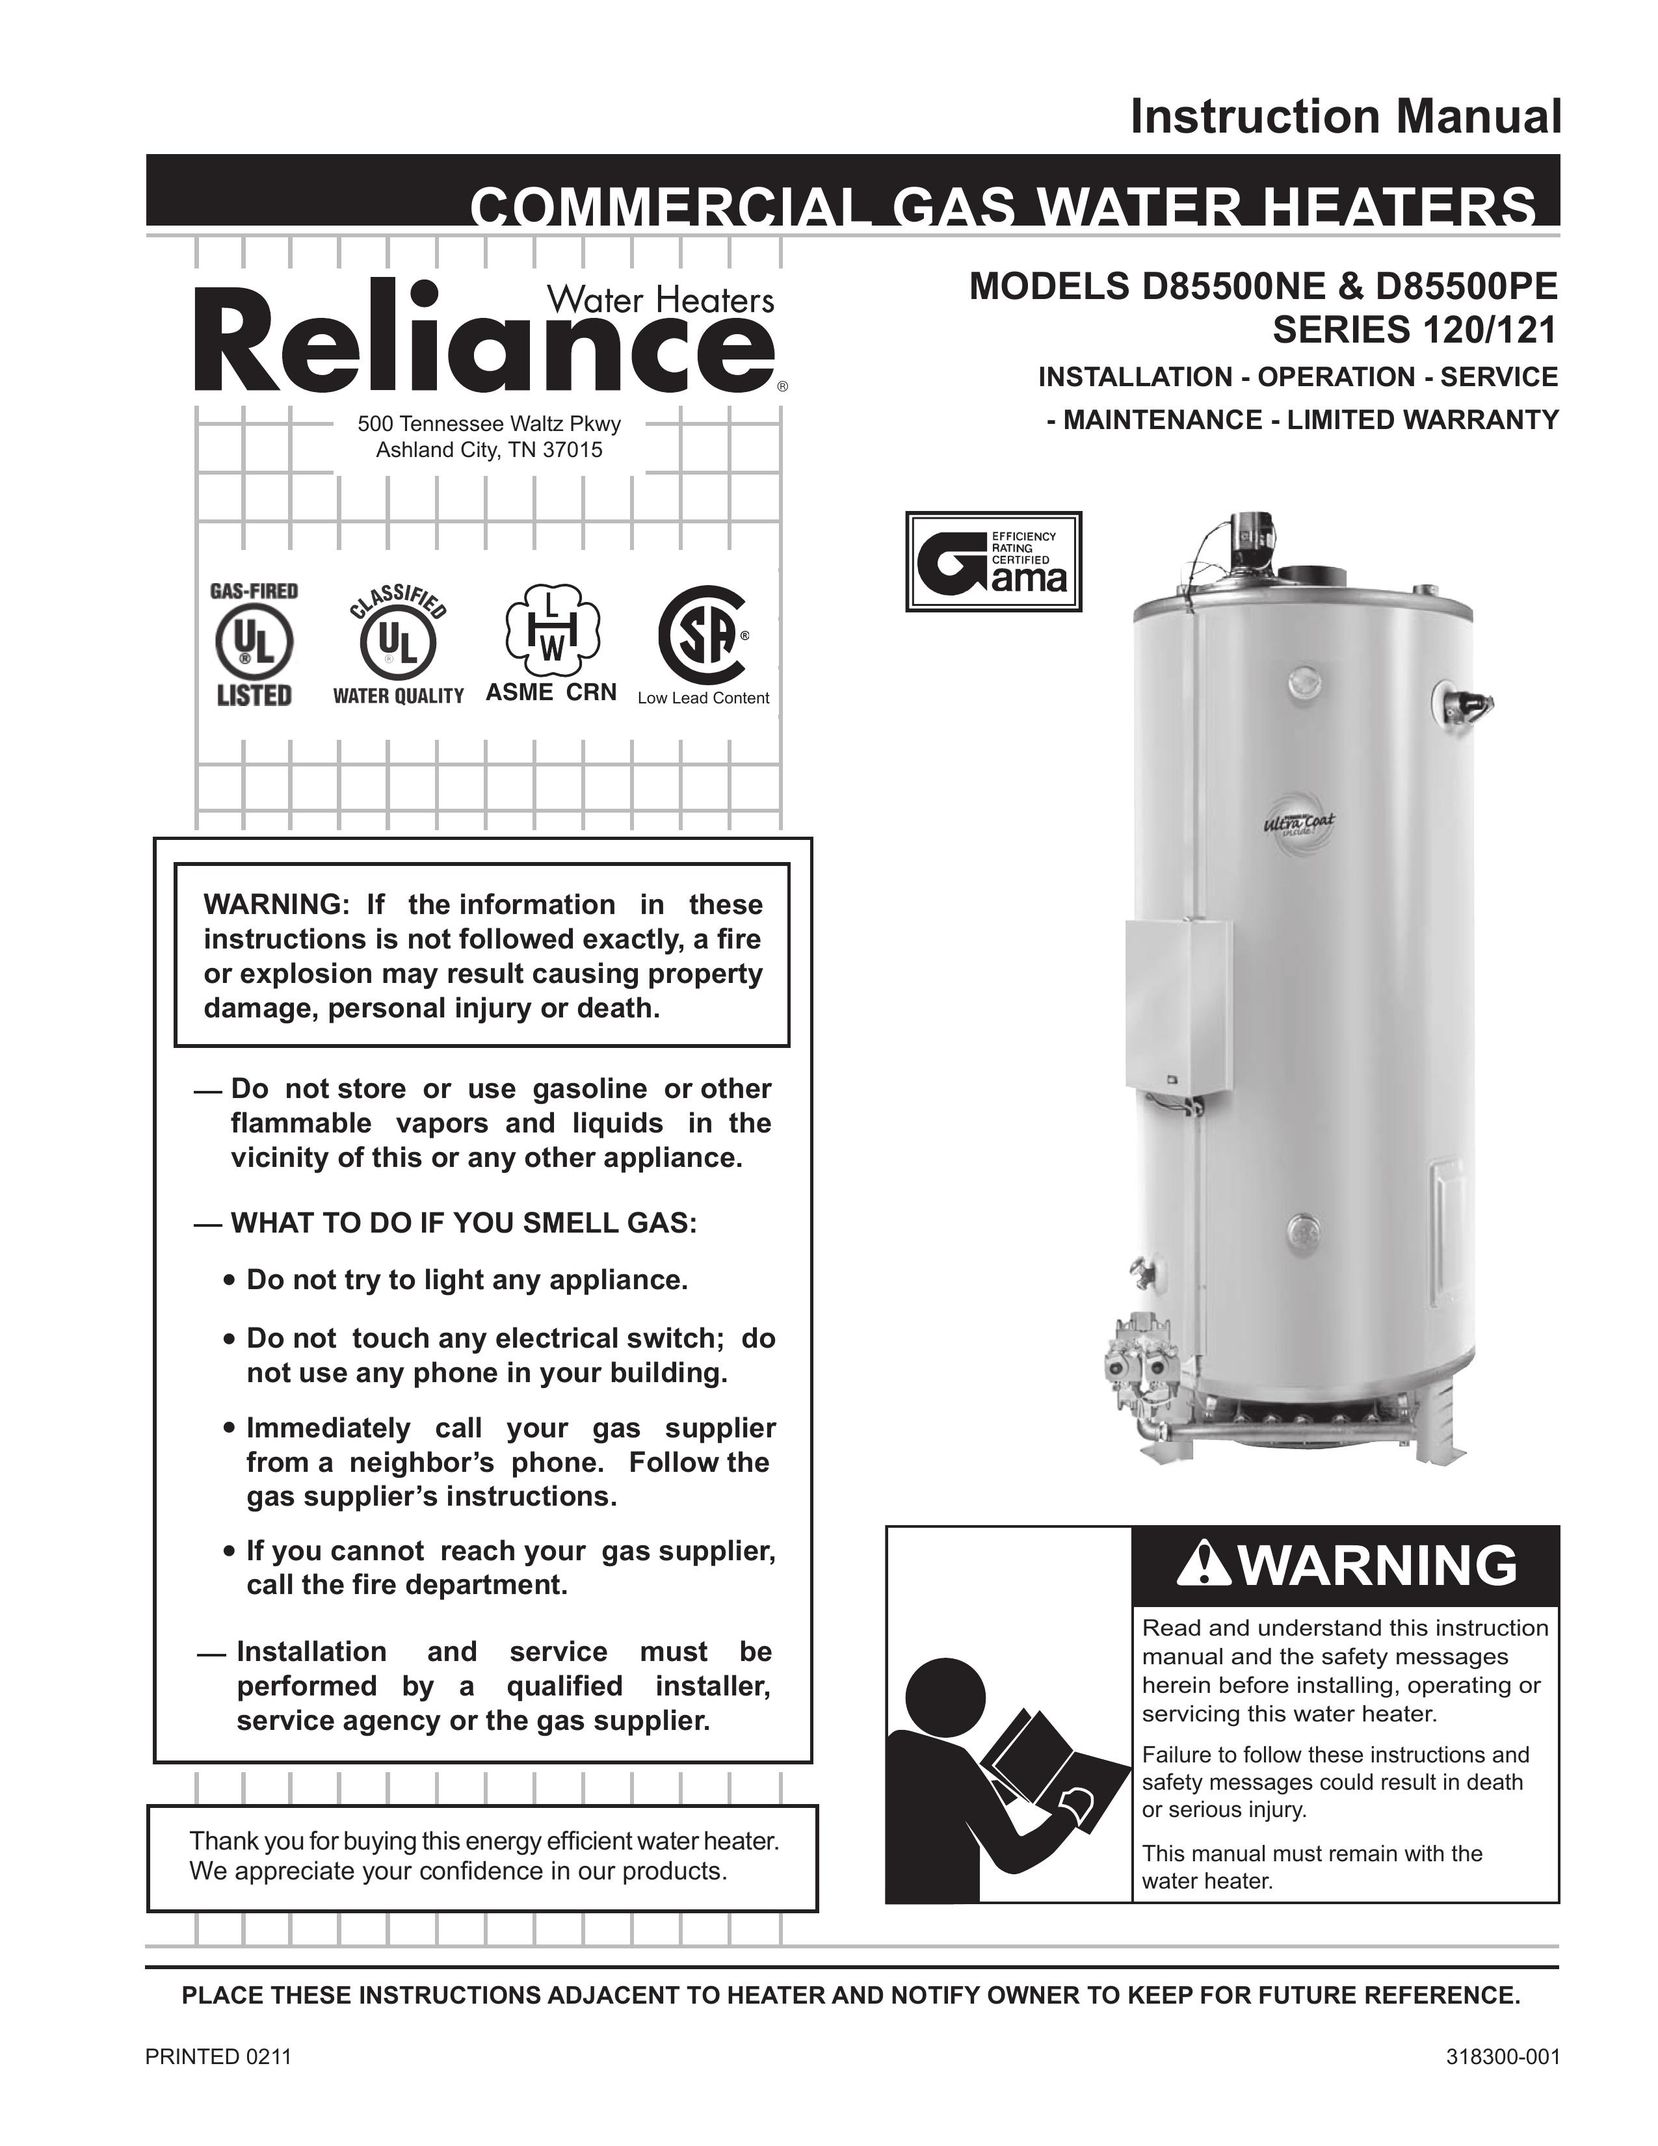 Reliance Water Heaters D85500PE Water Heater User Manual